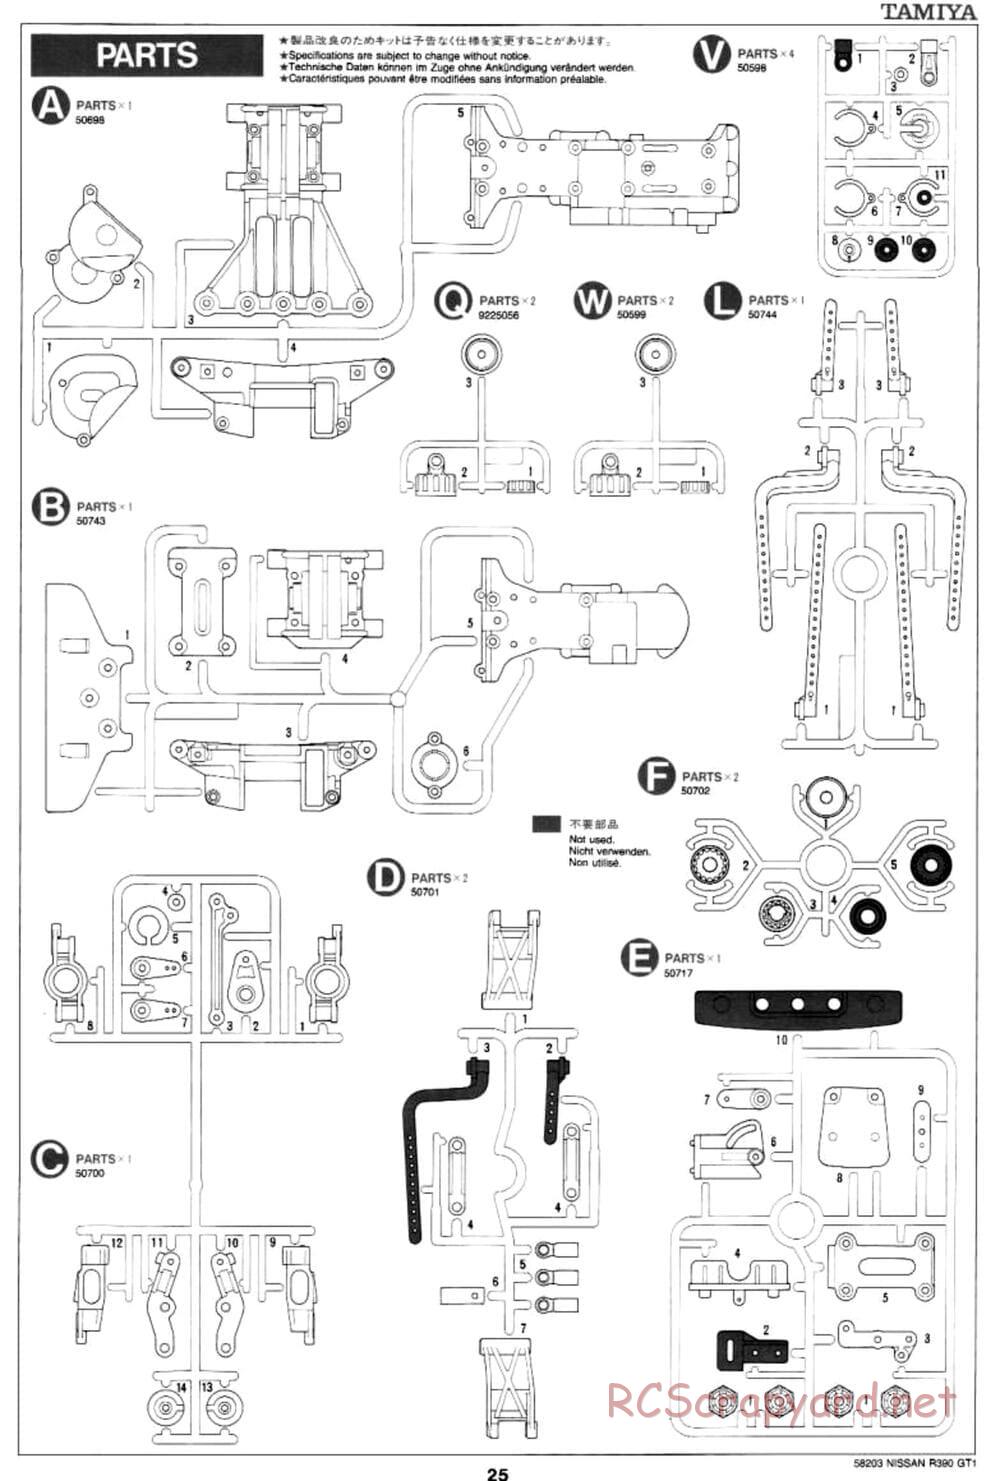 Tamiya - Nissan R390 GT1 - TA-03R Chassis - Manual - Page 25